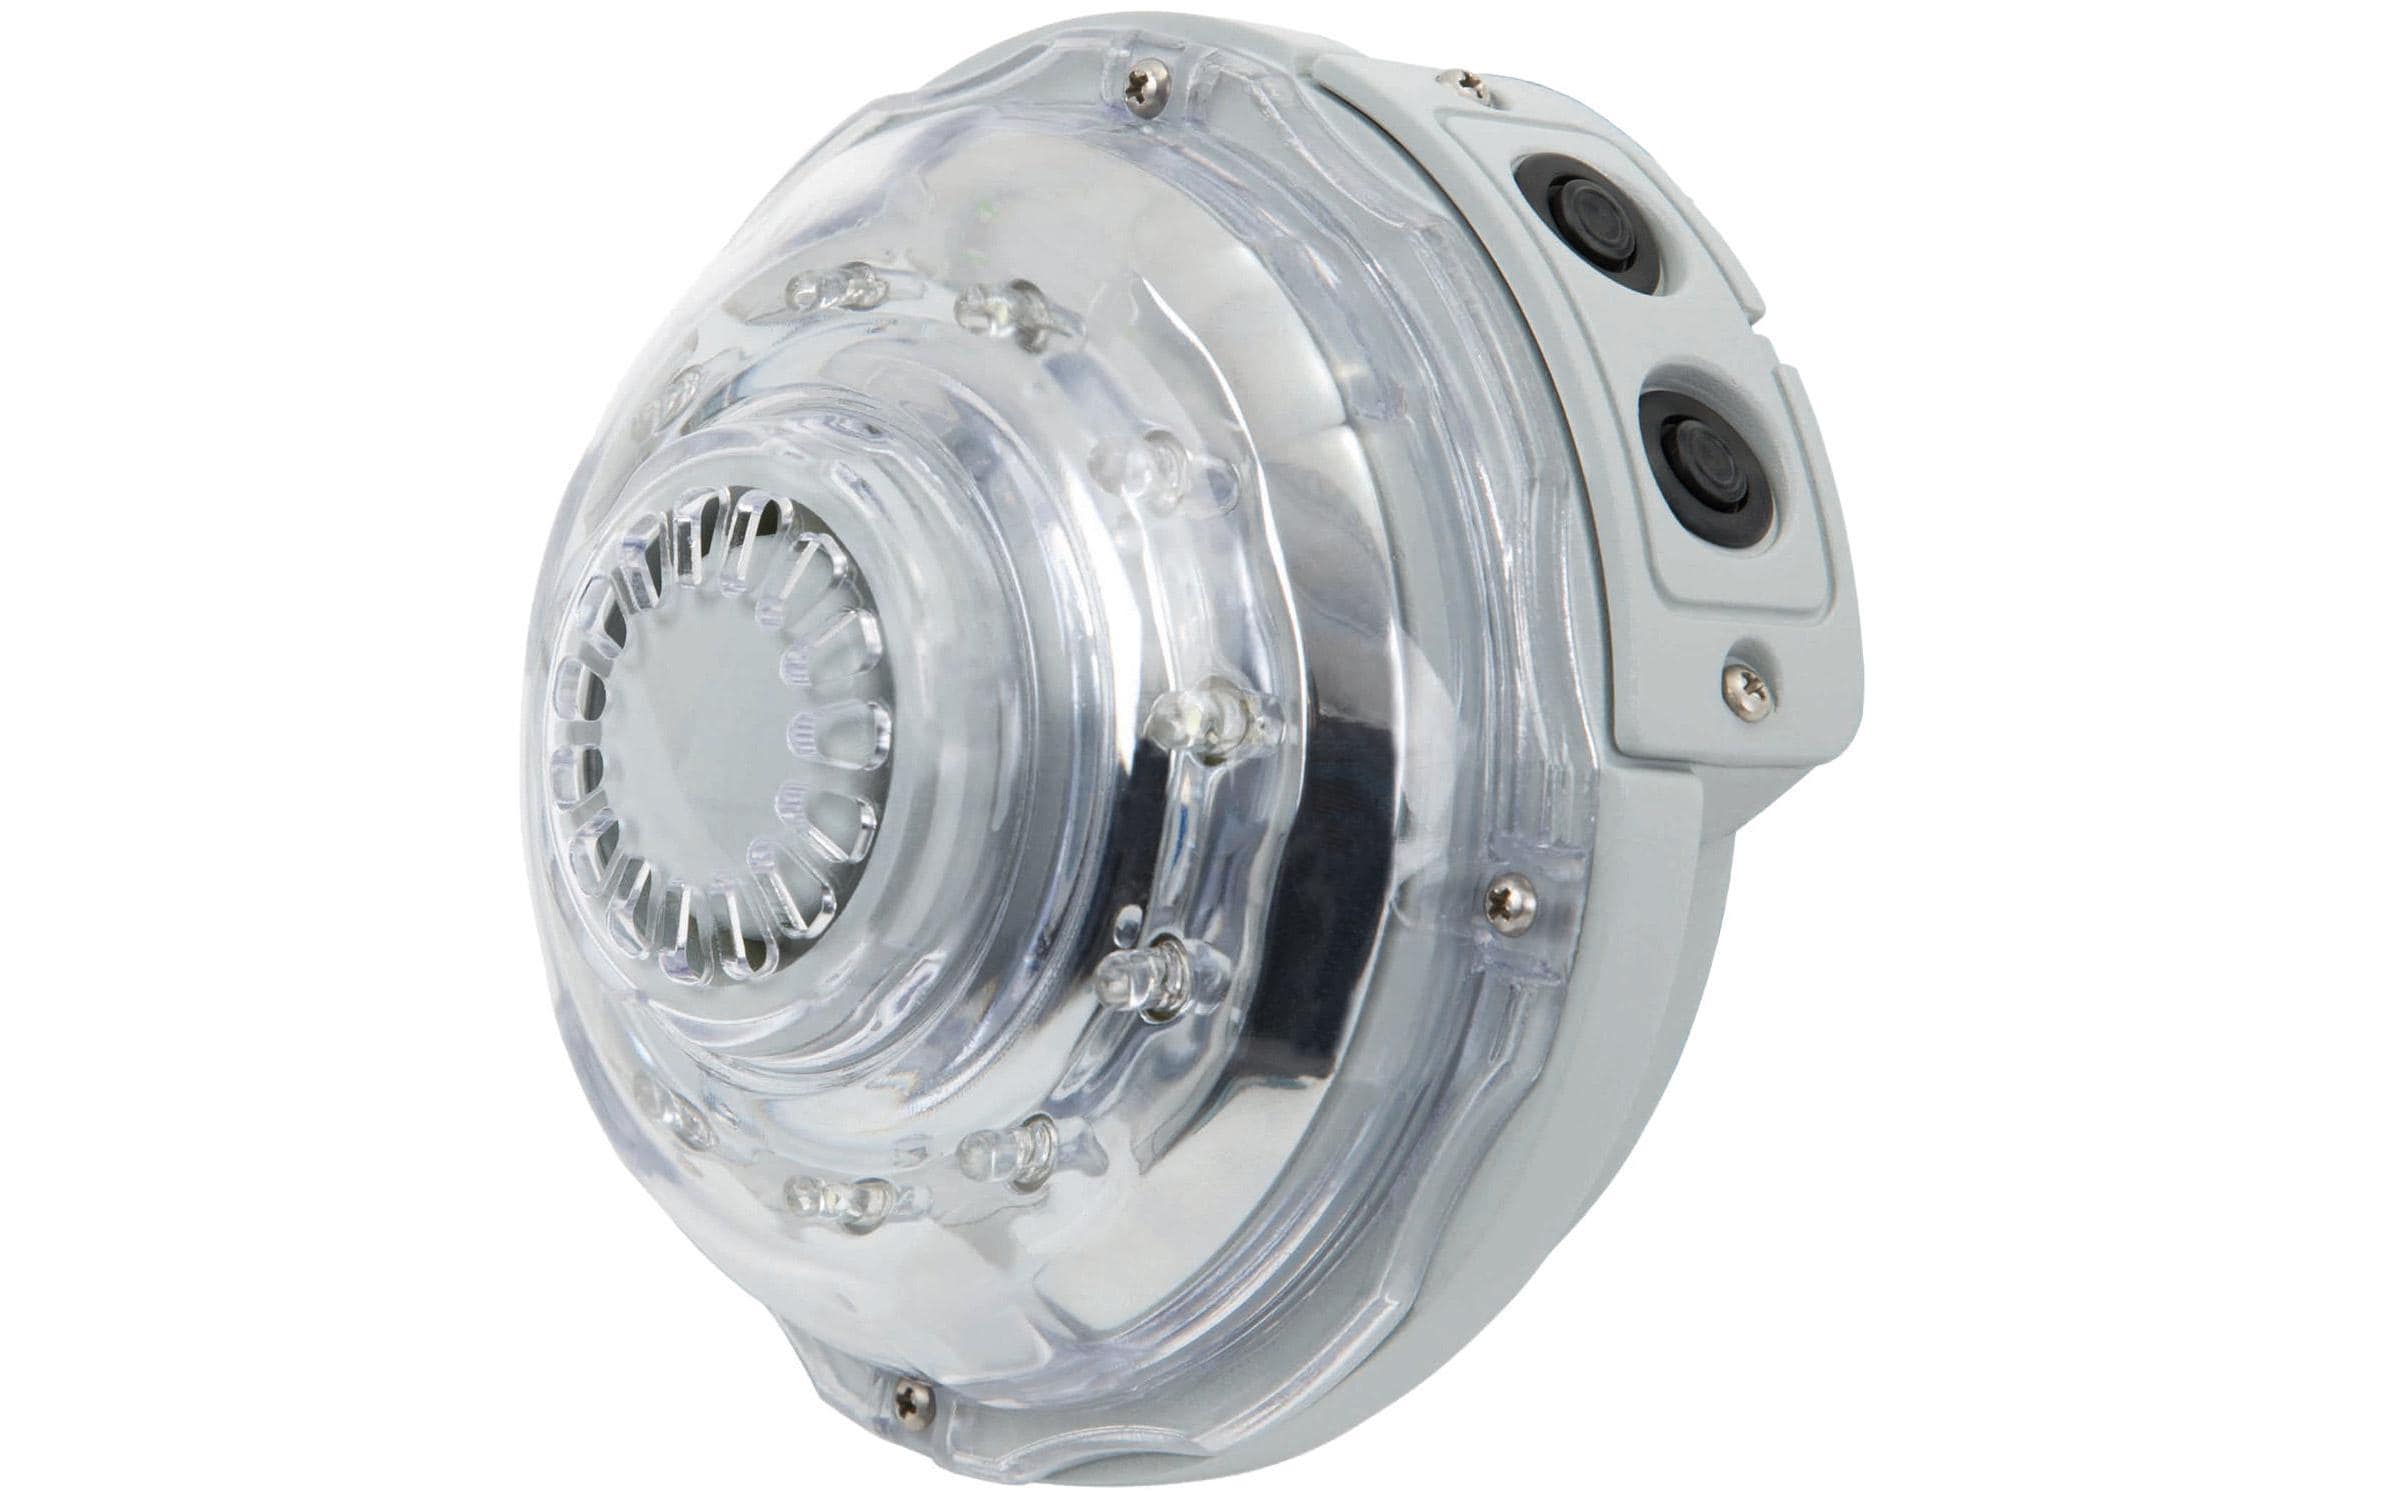 Intex Poollampe LED Combo Spa mehrfarbig